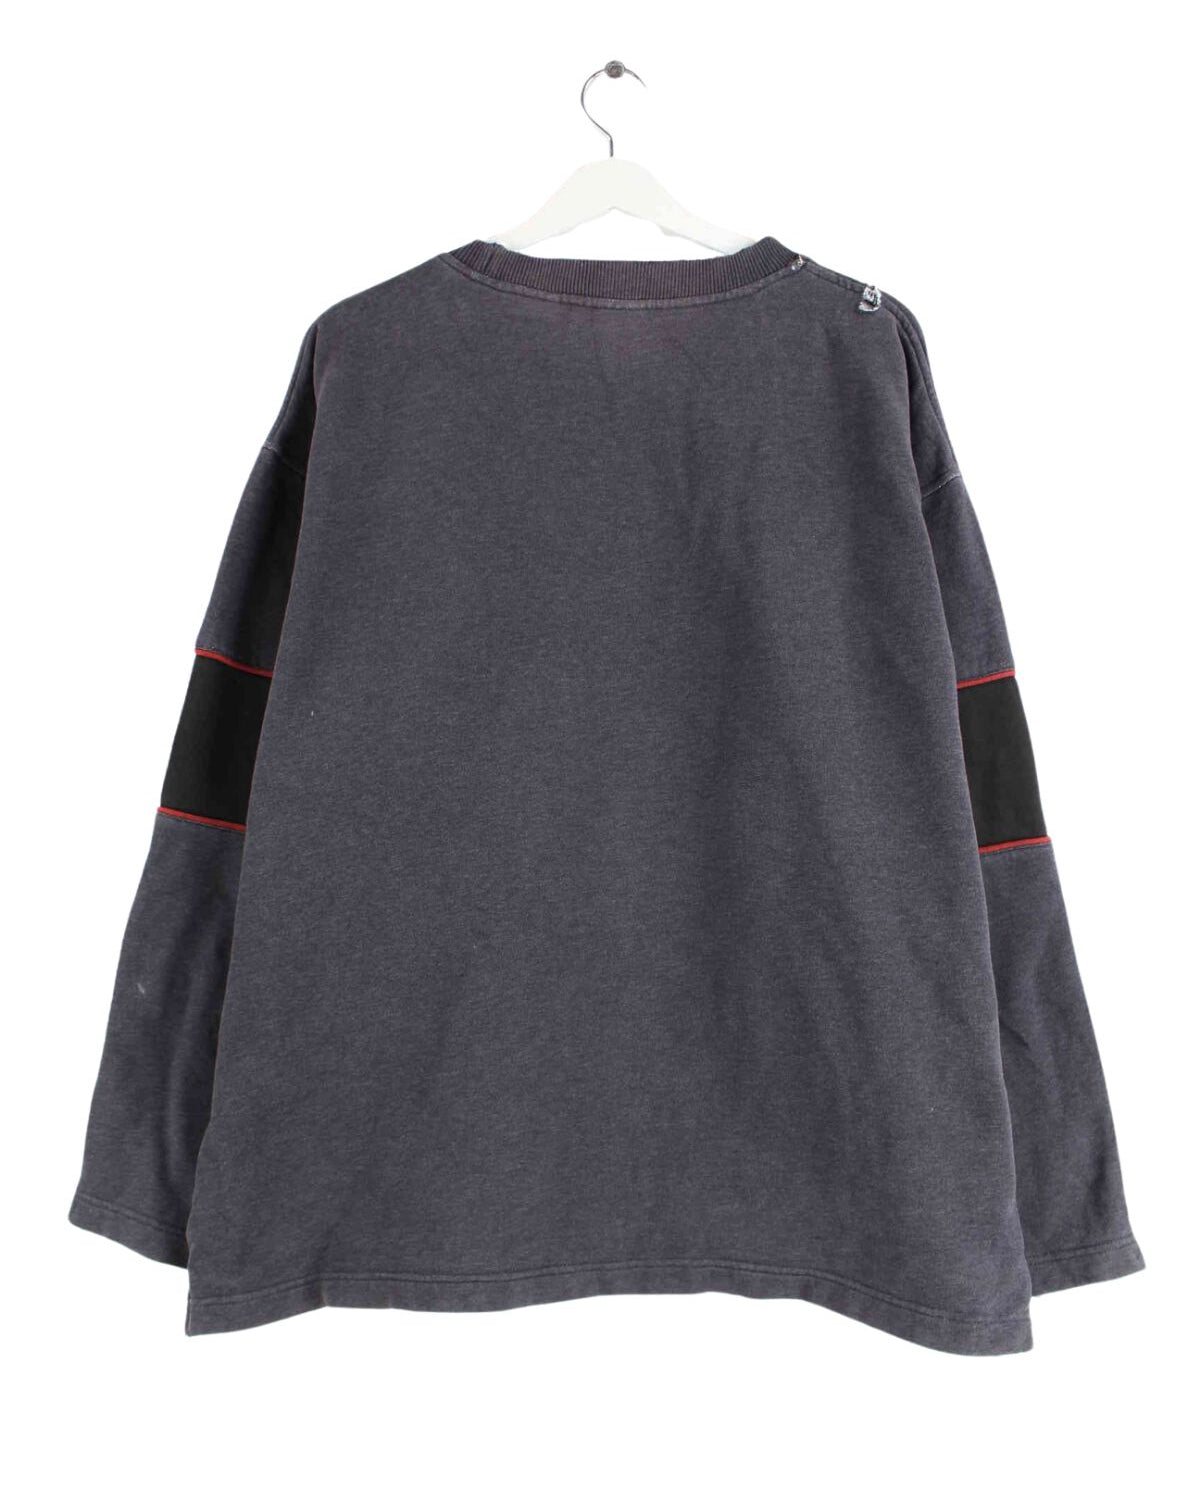 Fila 90s Vintage Embroidered Sweater Grau L (back image)